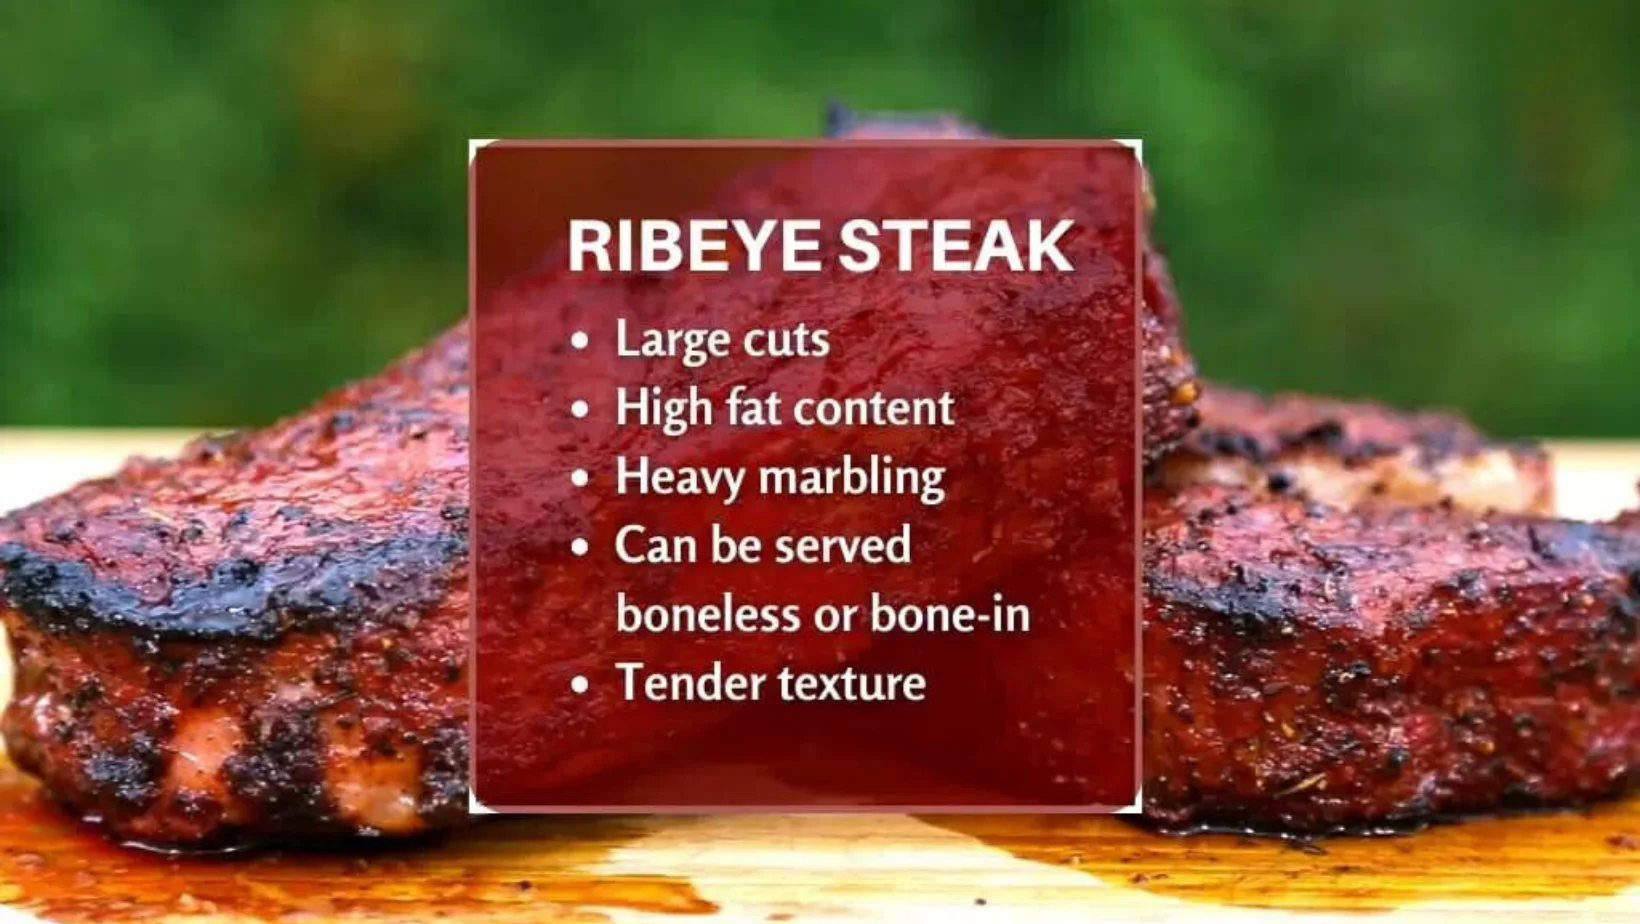 What is Ribeye